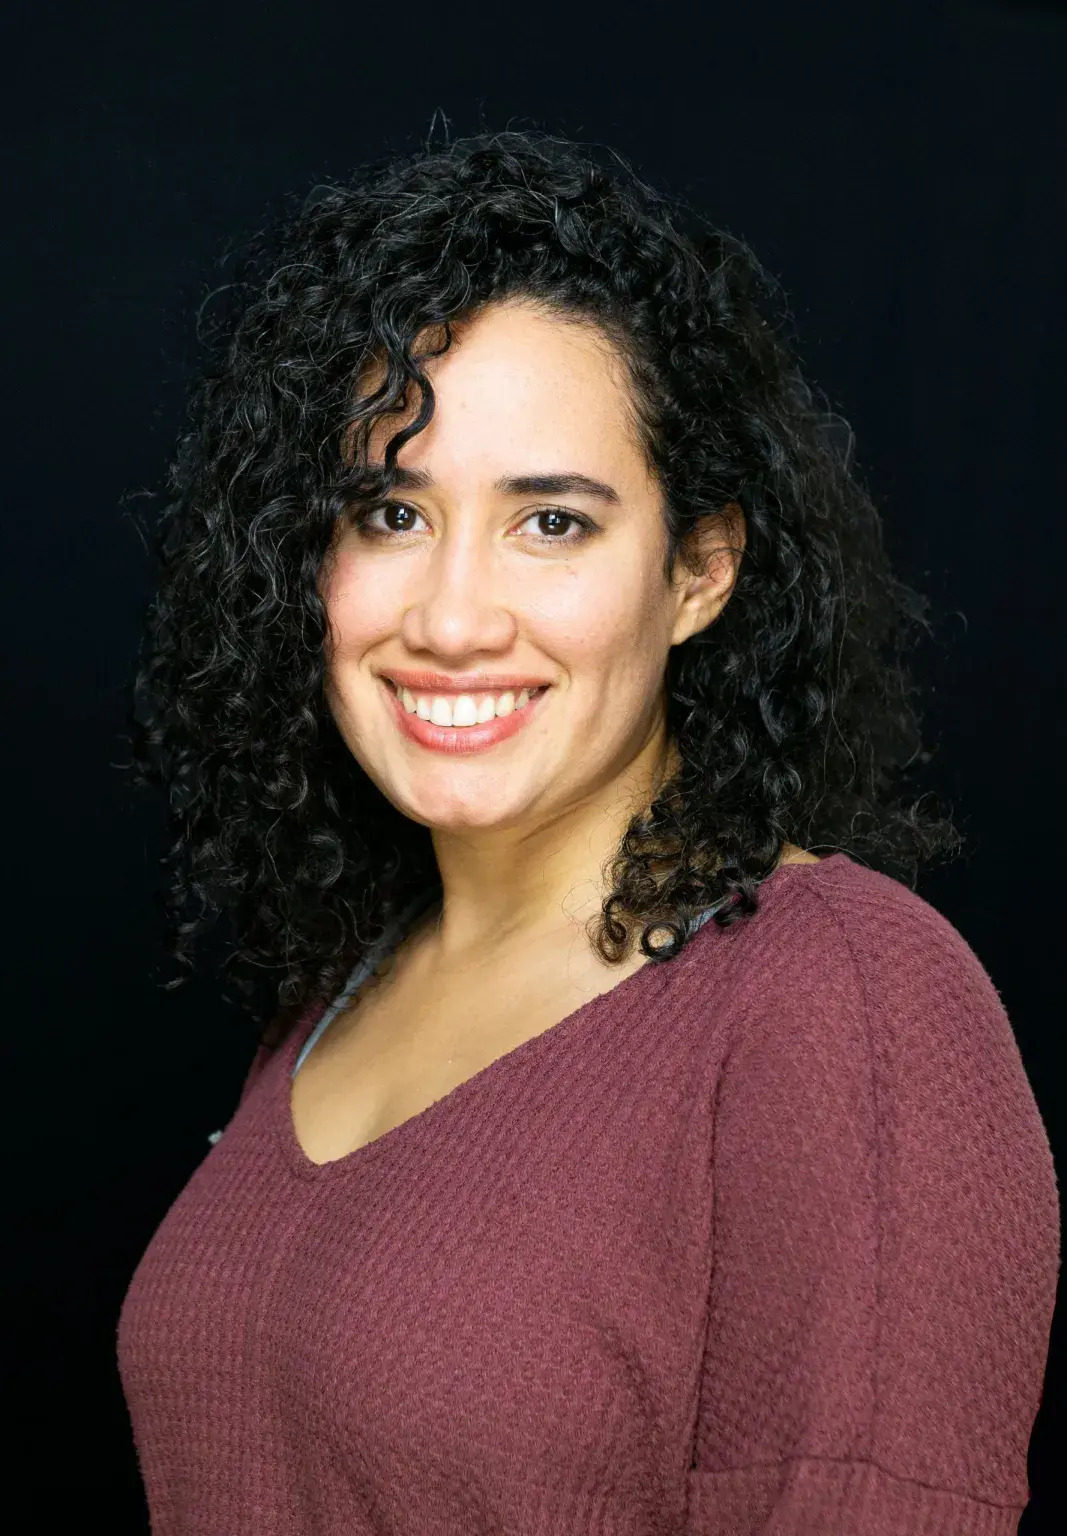 Meet Karlha Velásquez, SPN Multimedia Producer